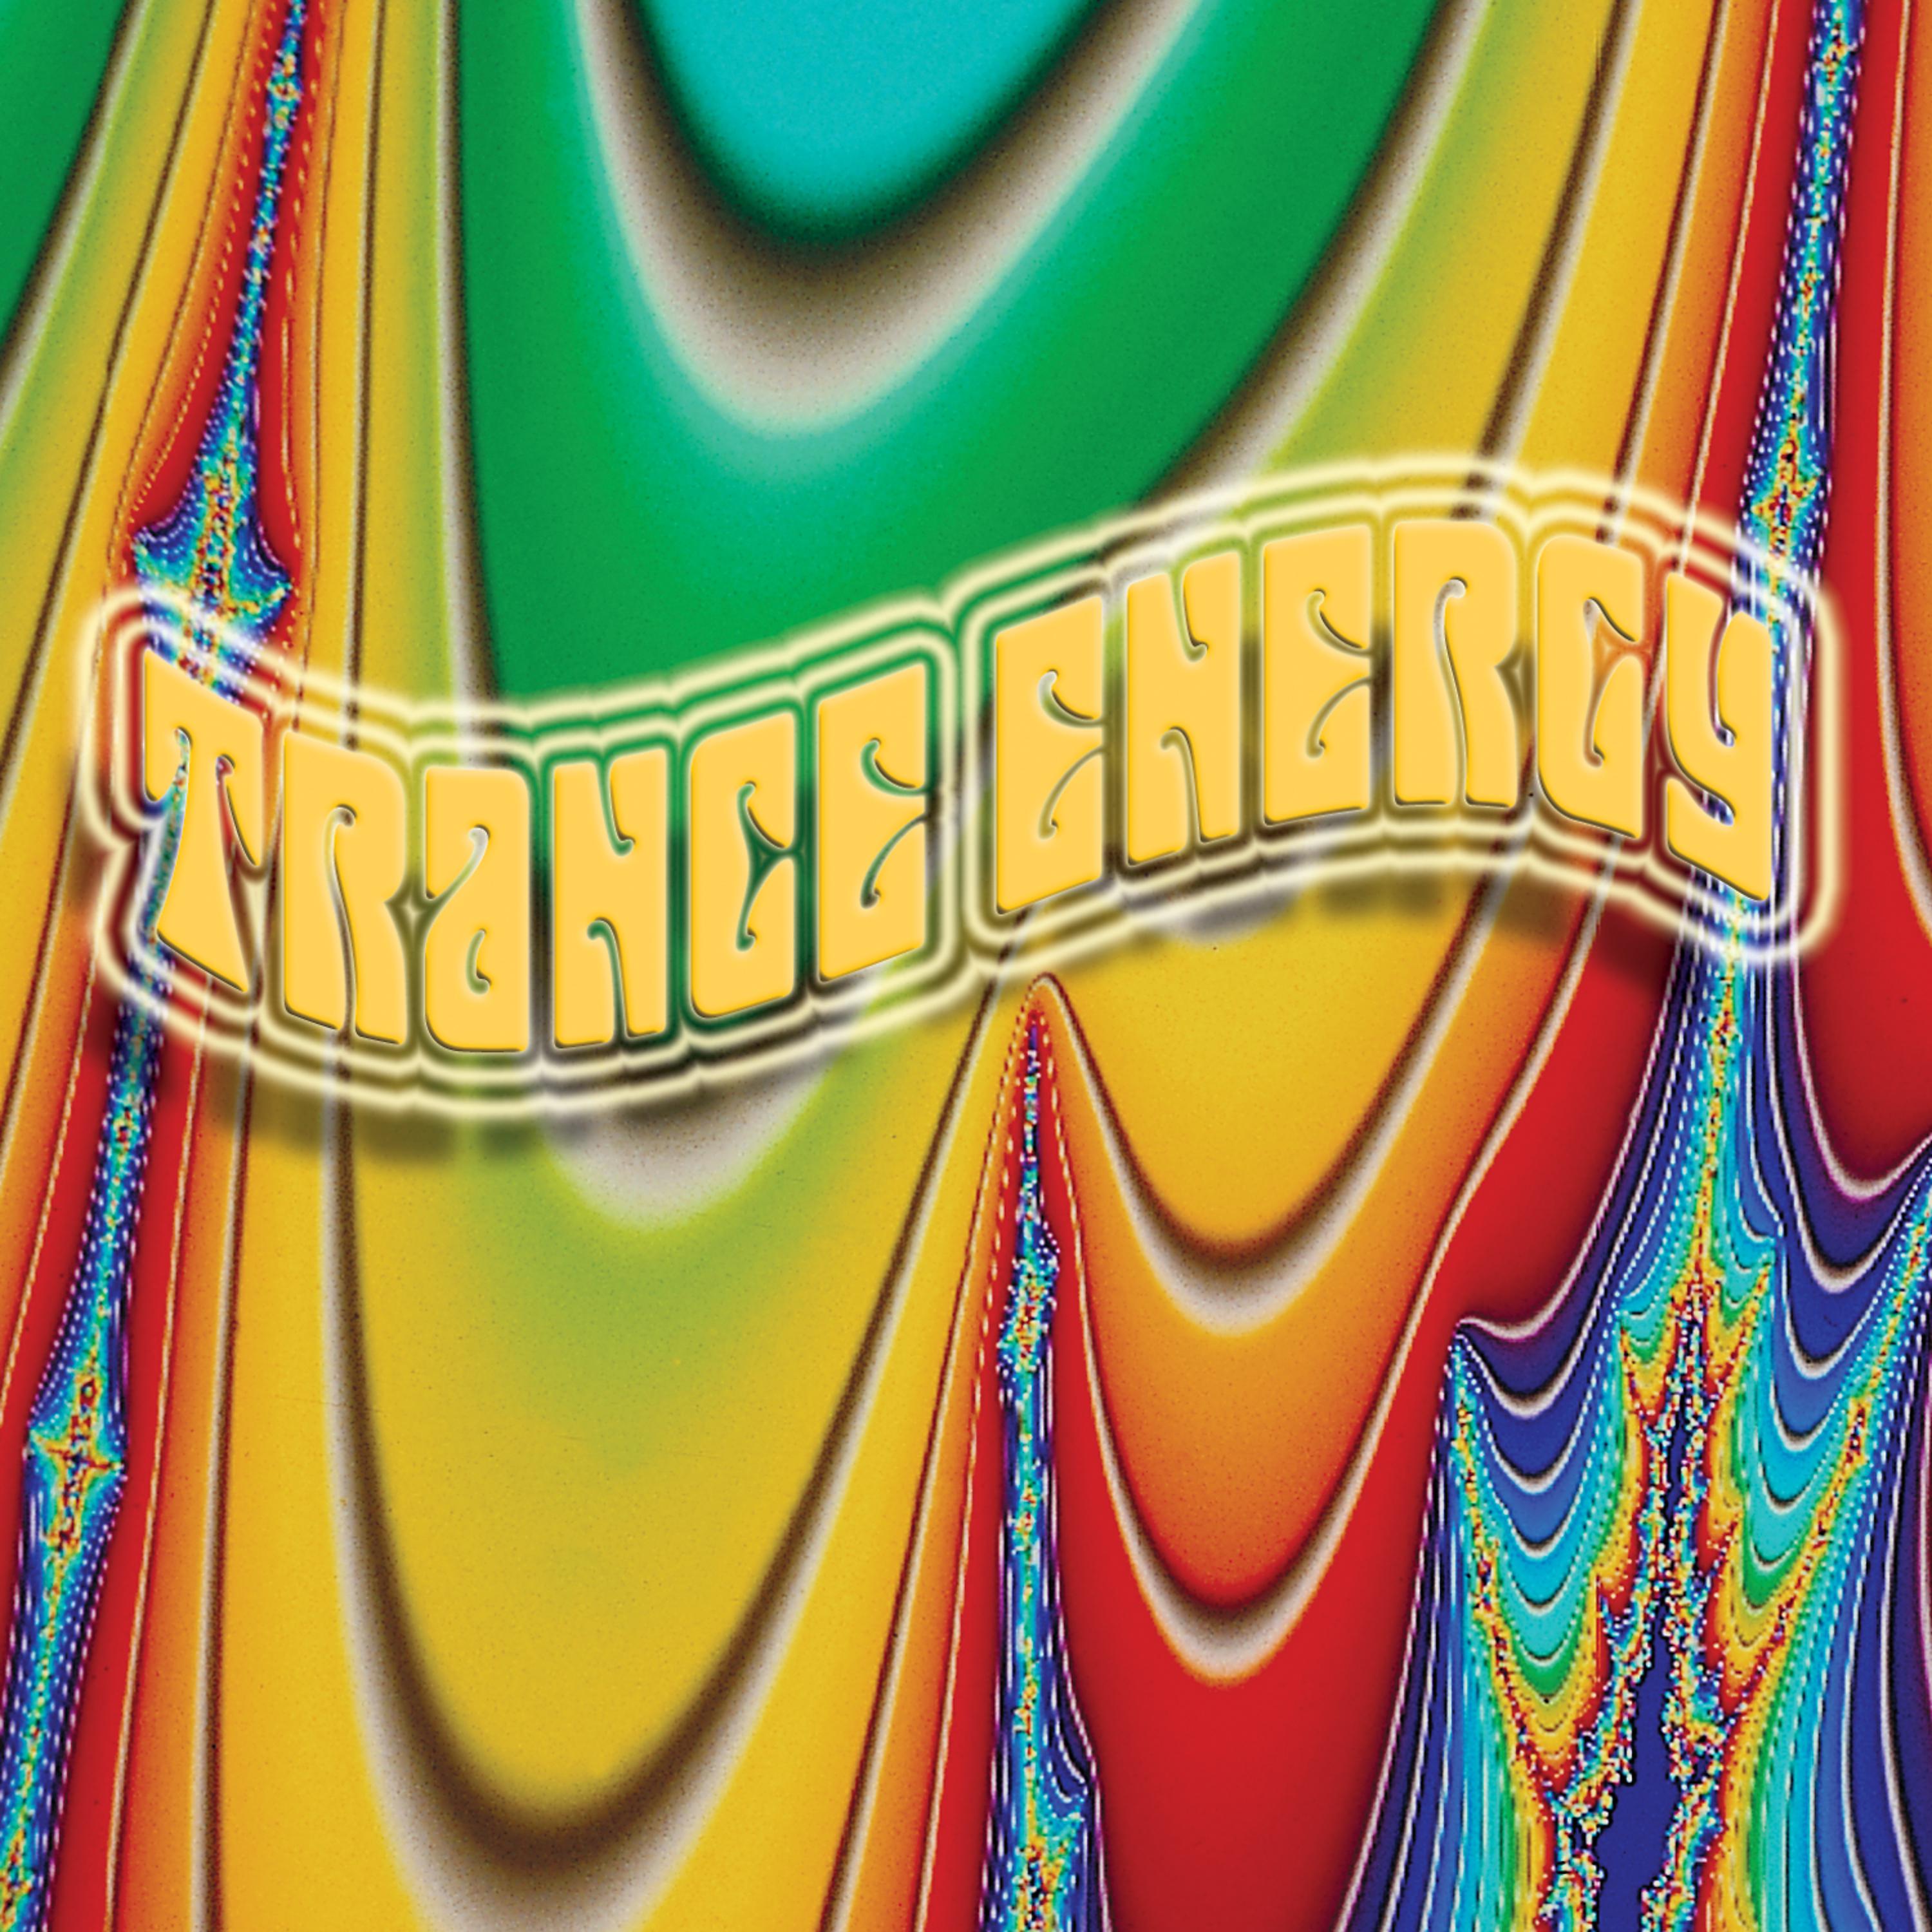 Постер альбома Trance Energy